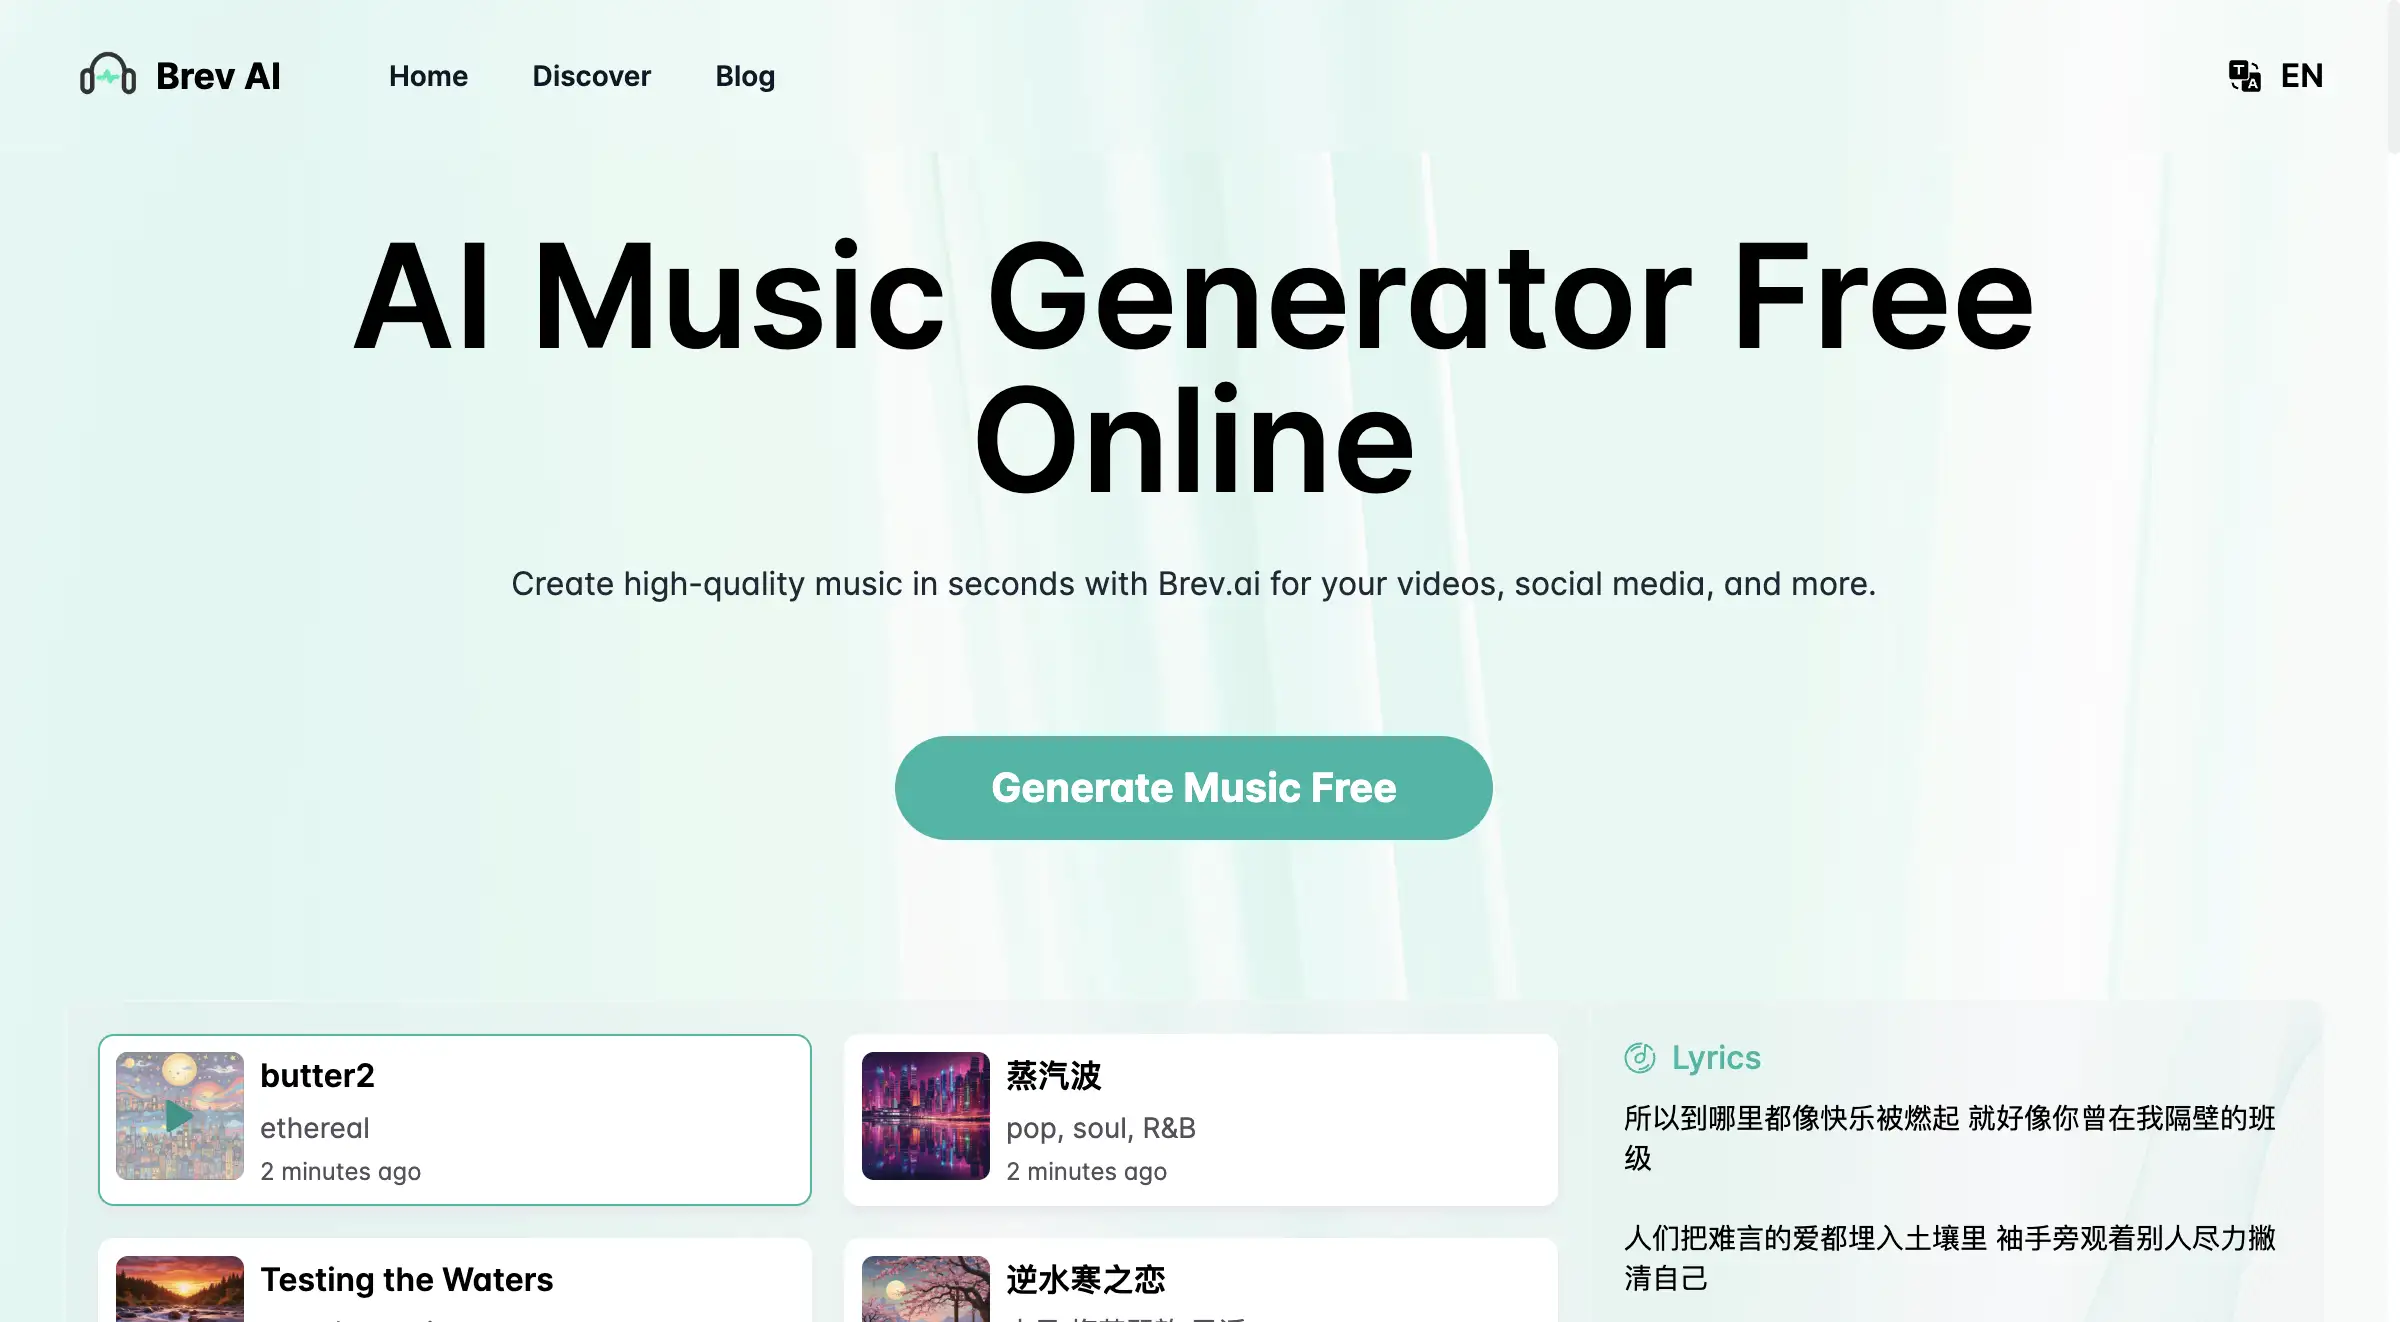 Brev.ai AI Music Generator